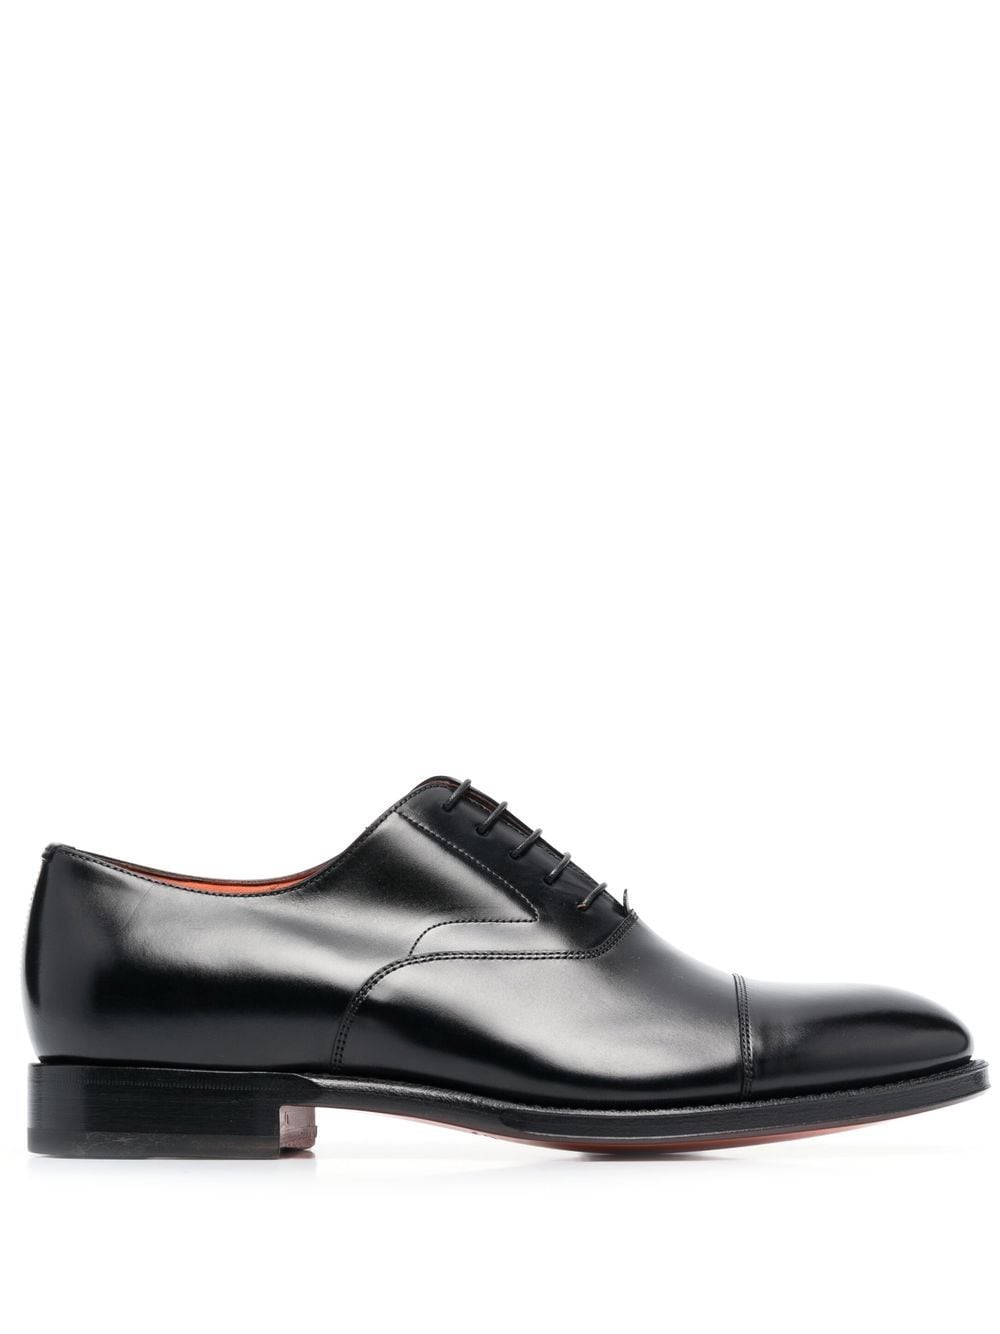 Santoni polished leather oxford shoes - Black von Santoni